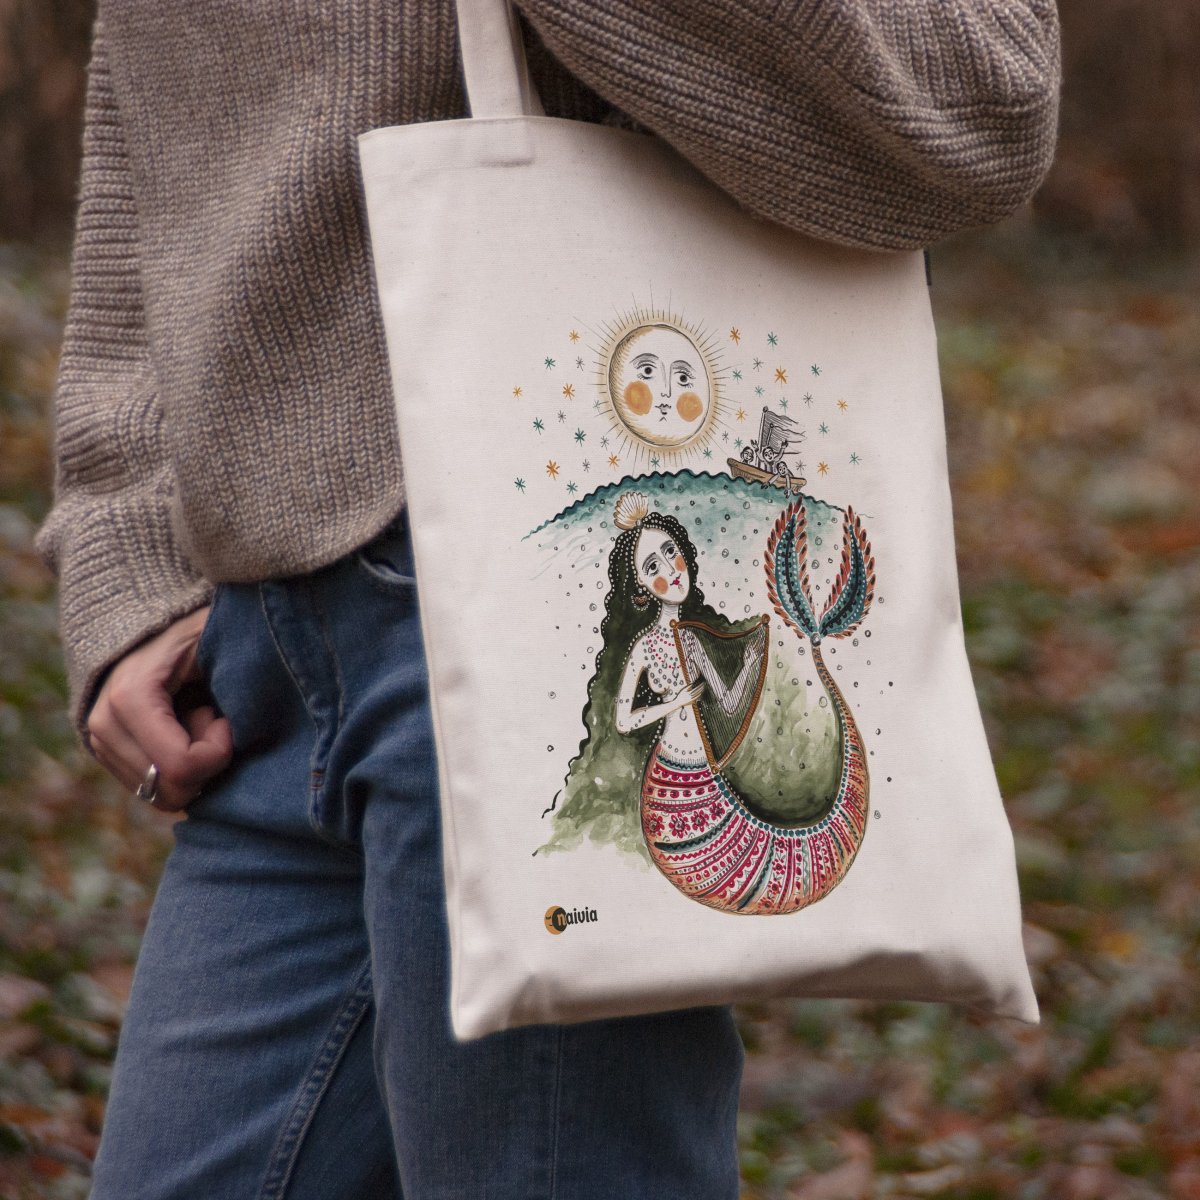 Printed Tote Bag, "The Mermaid", model 1, 100% cotton, 31x40 cm